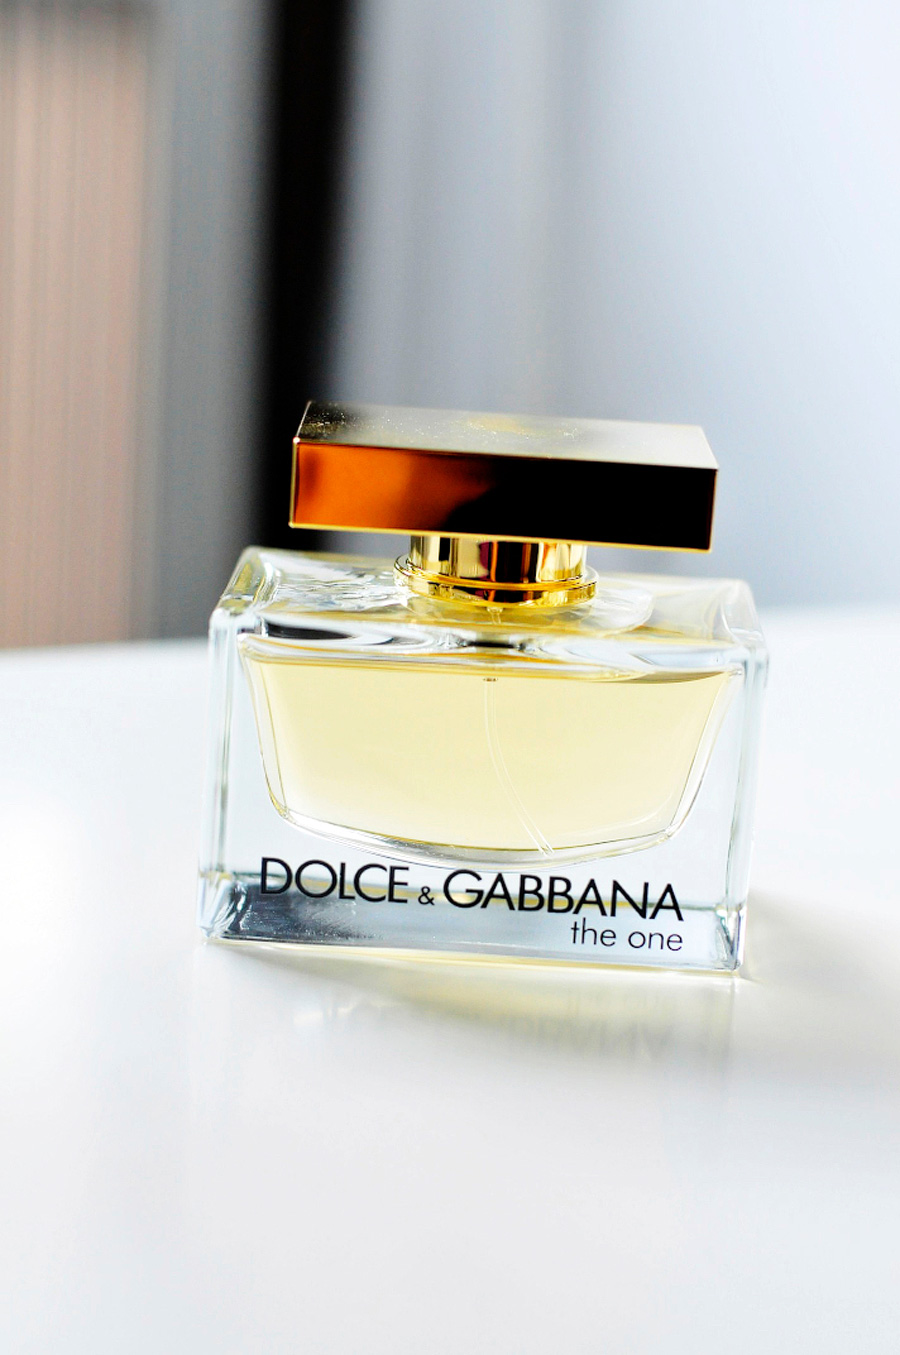 dolce & gabbana the one perfume